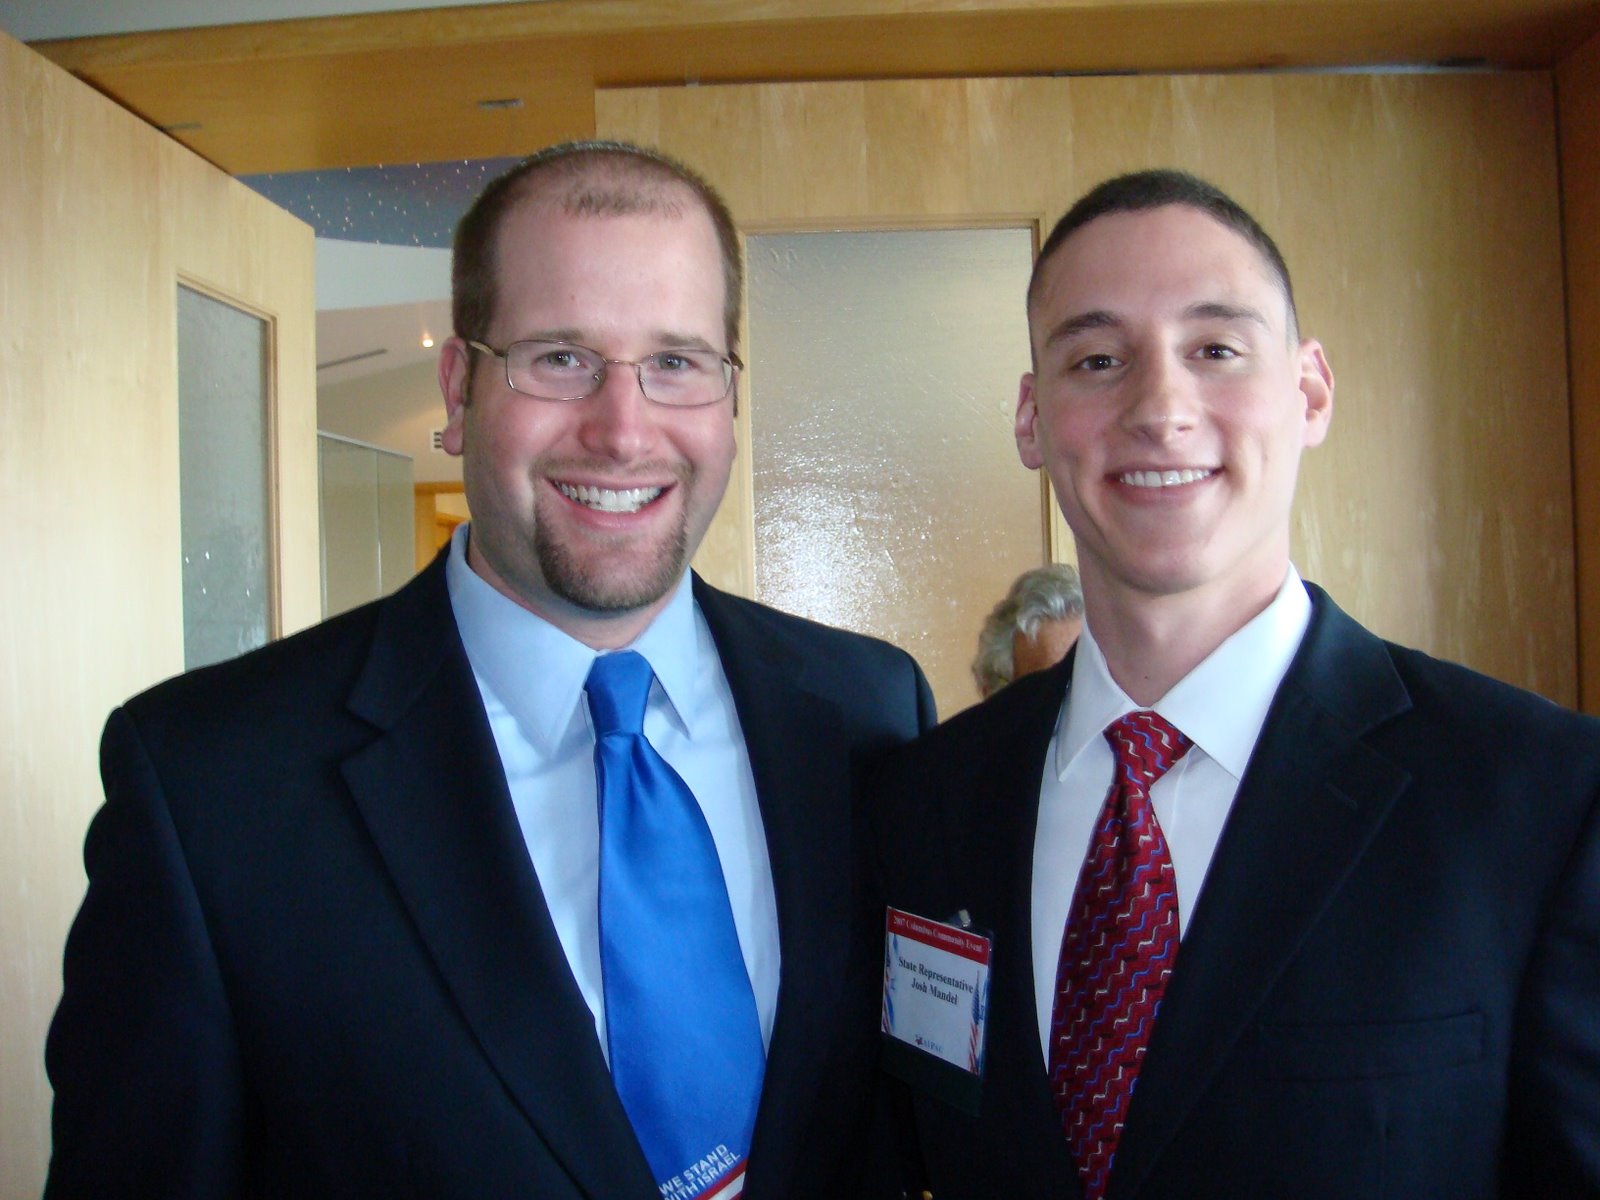 Rabbi Jason Miller and Rep. Josh Mandel